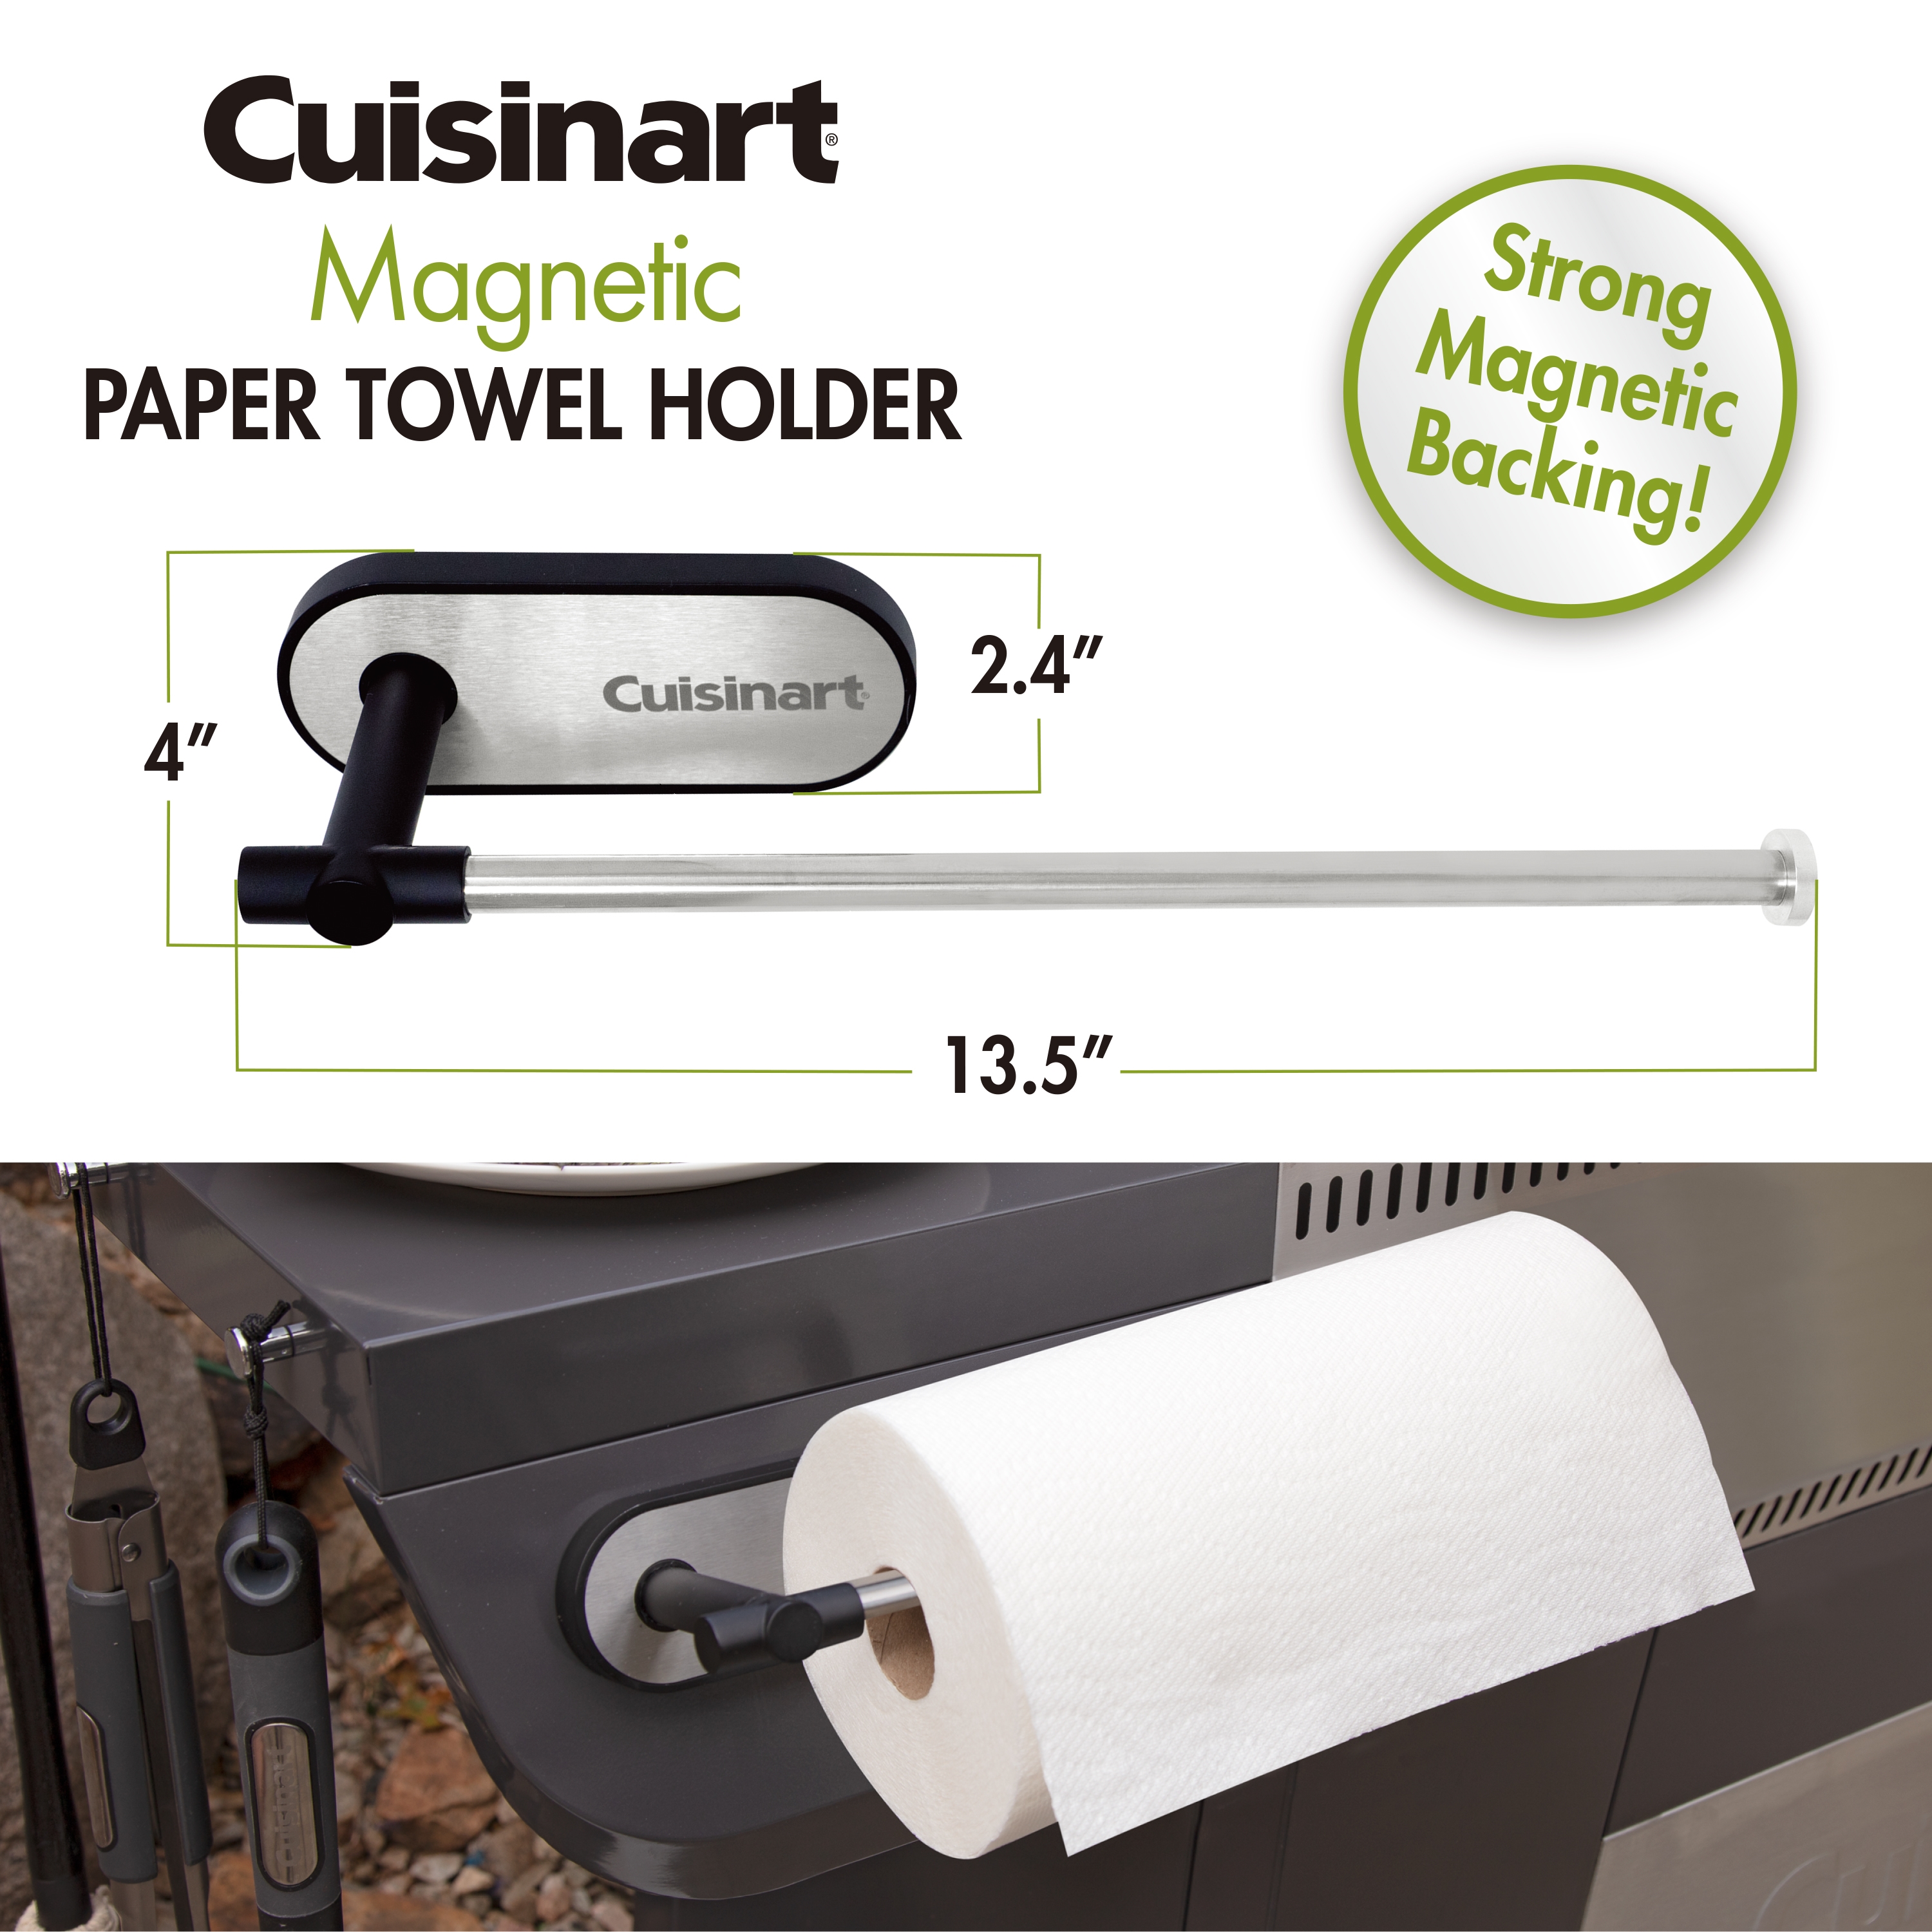 Cuisinart Magnetic Paper Towel Holder 